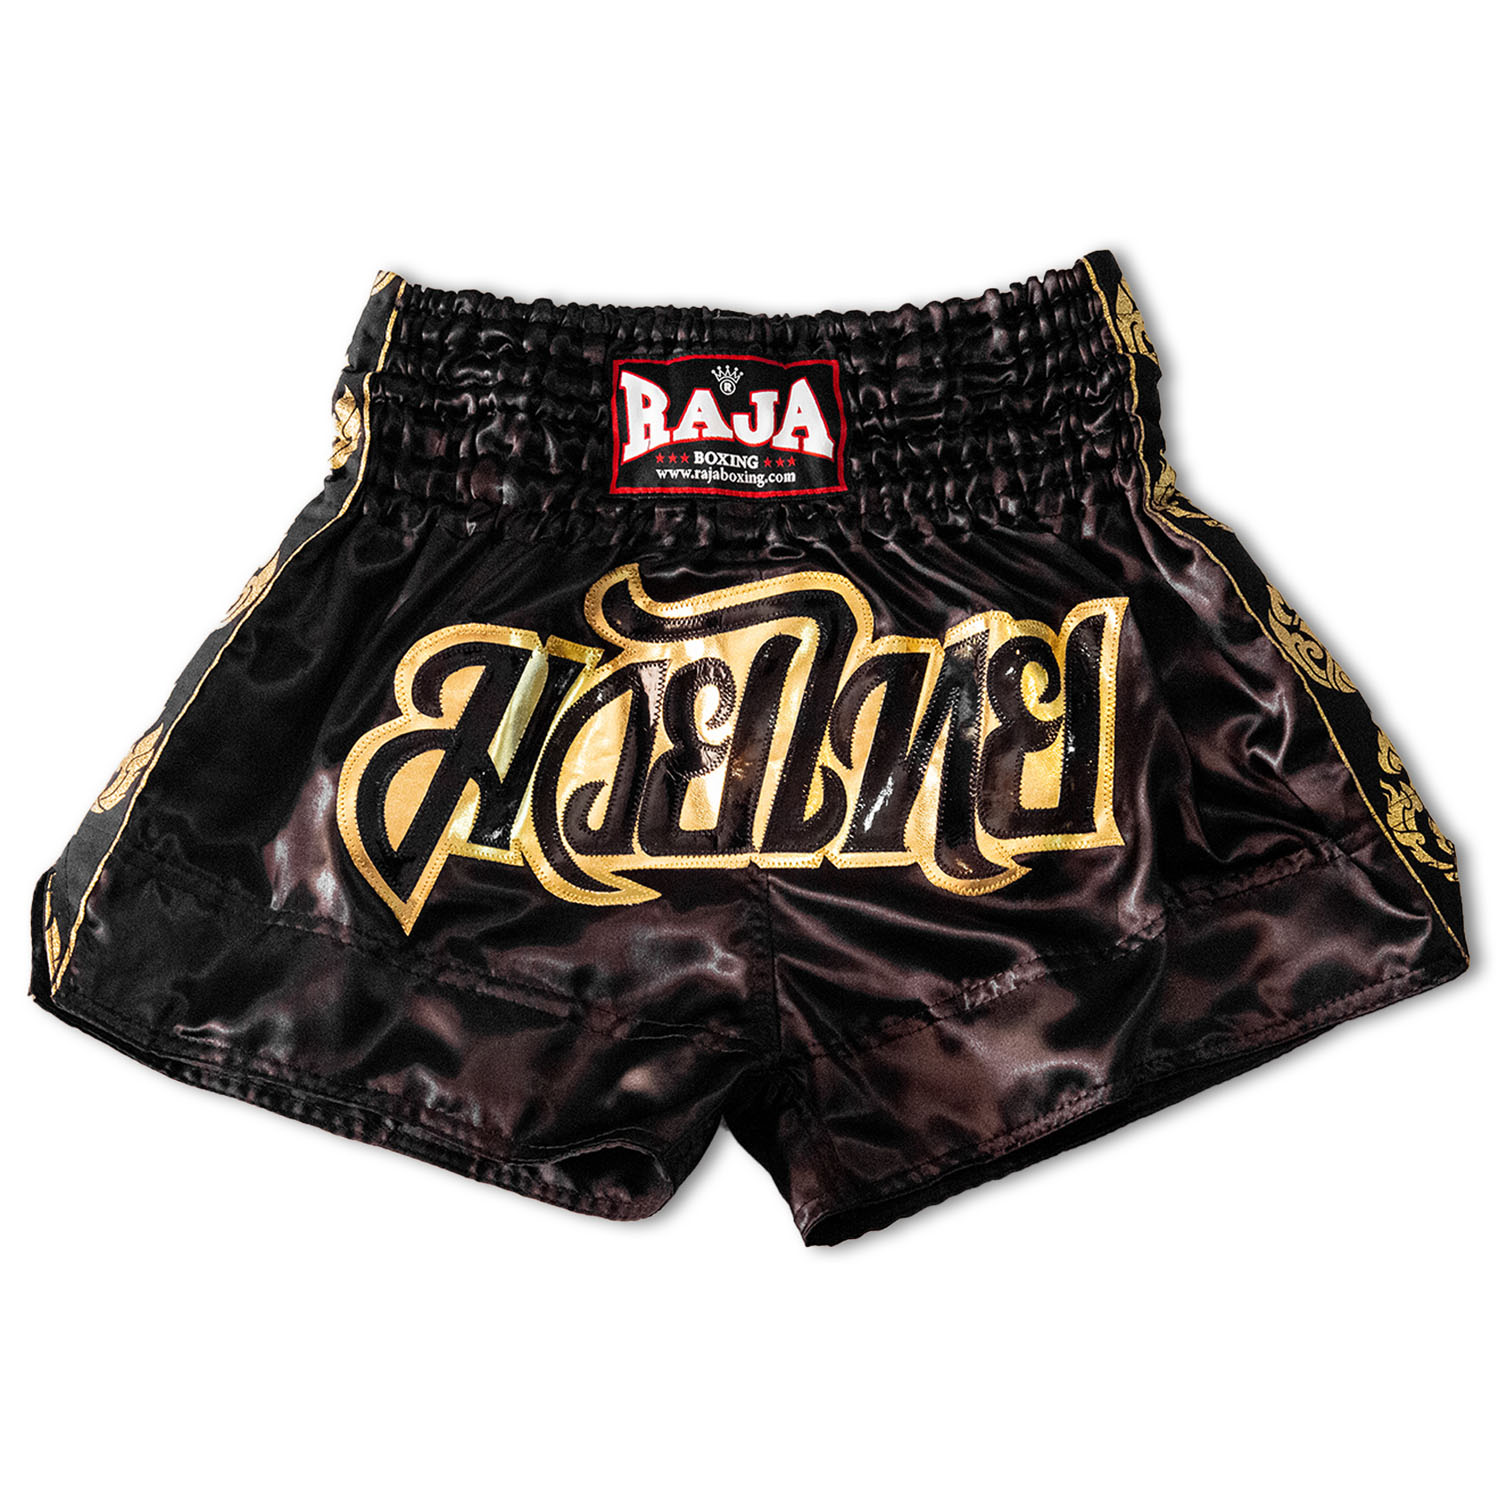 RAJA Boxing Muay Thai Shorts, Lai Thai, schwarz